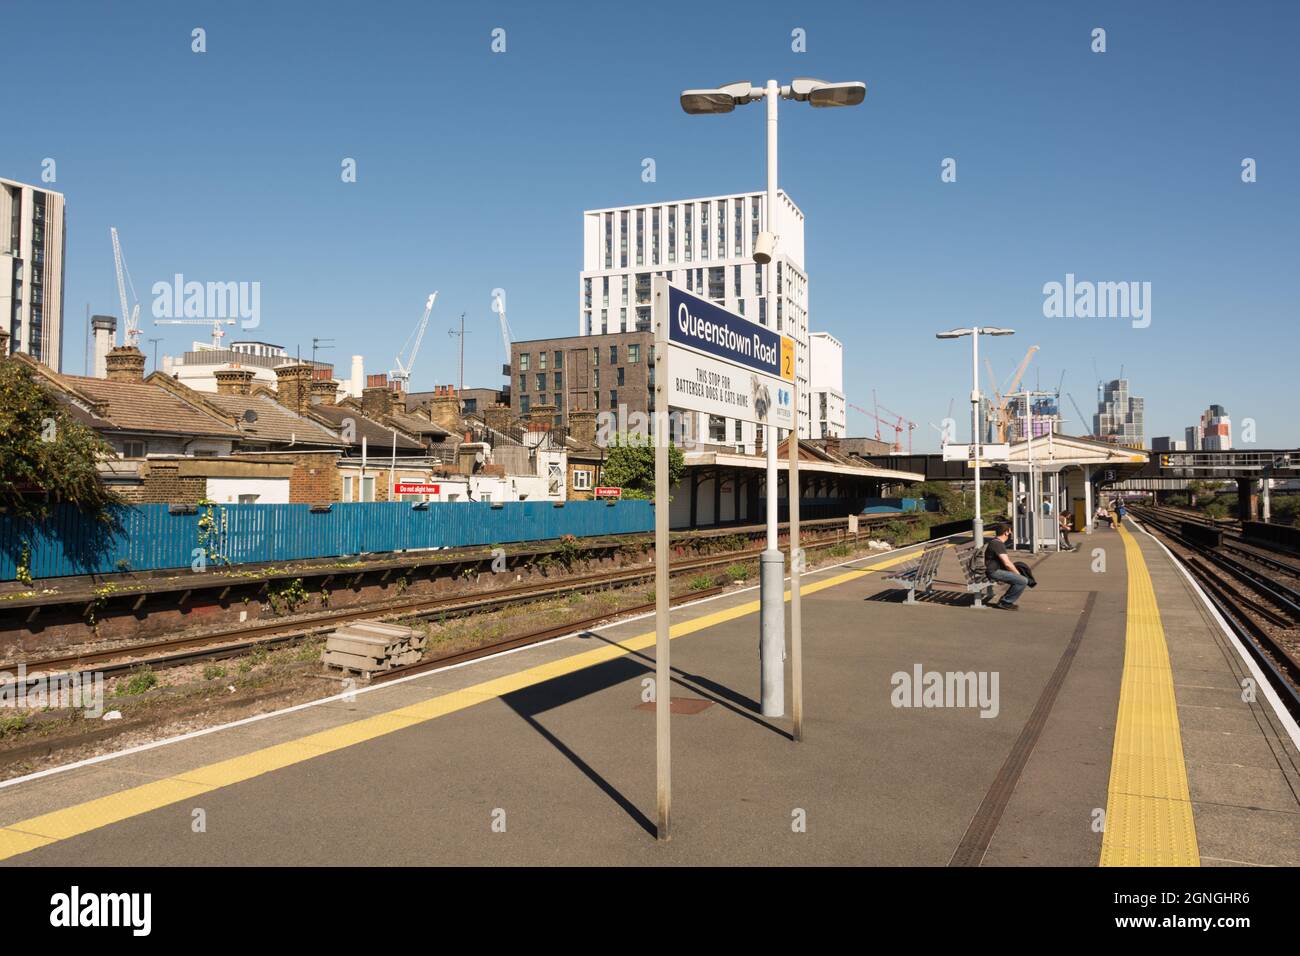 Gare de Queenstown Road, South Western Railway, Battersea, Londres, Angleterre, Royaume-Uni Banque D'Images